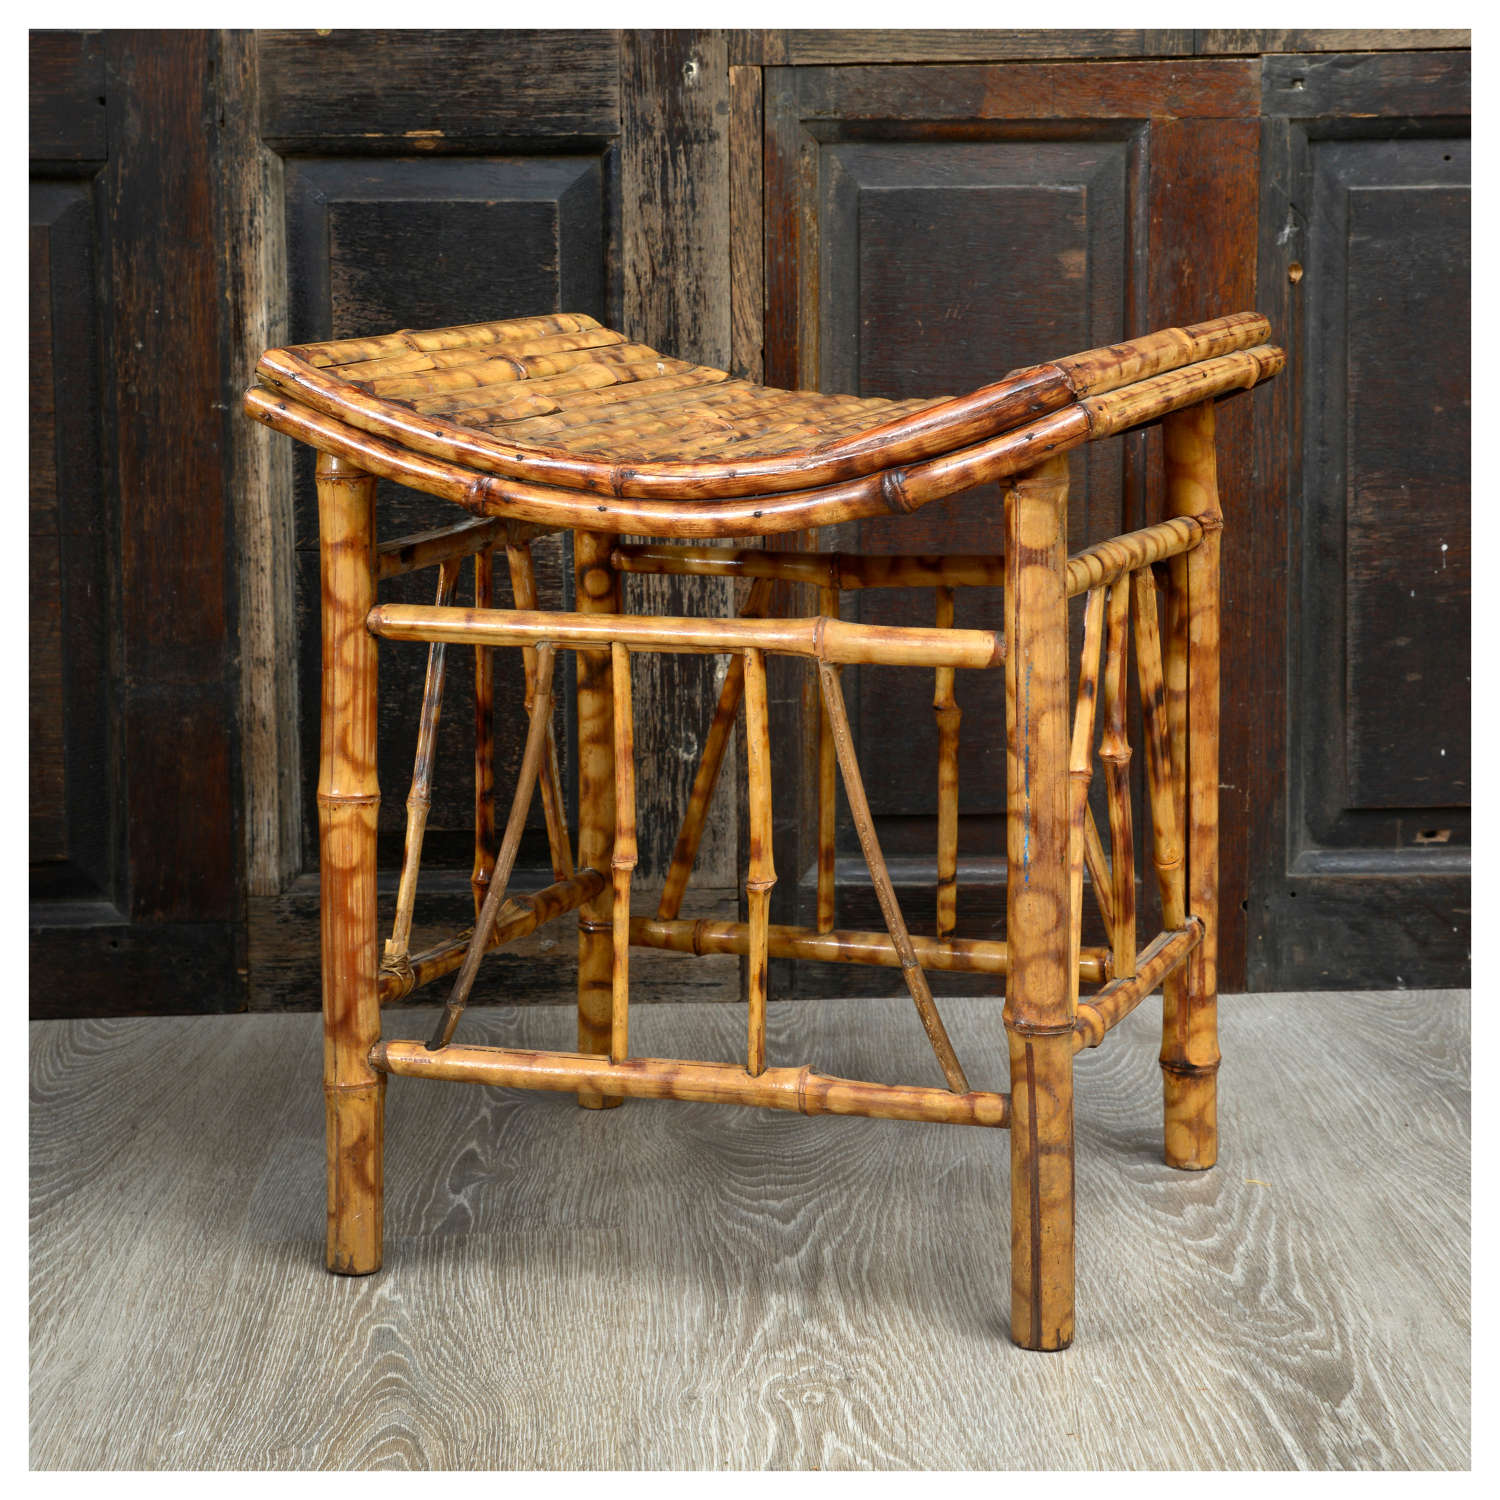 French saddle top bamboo stool